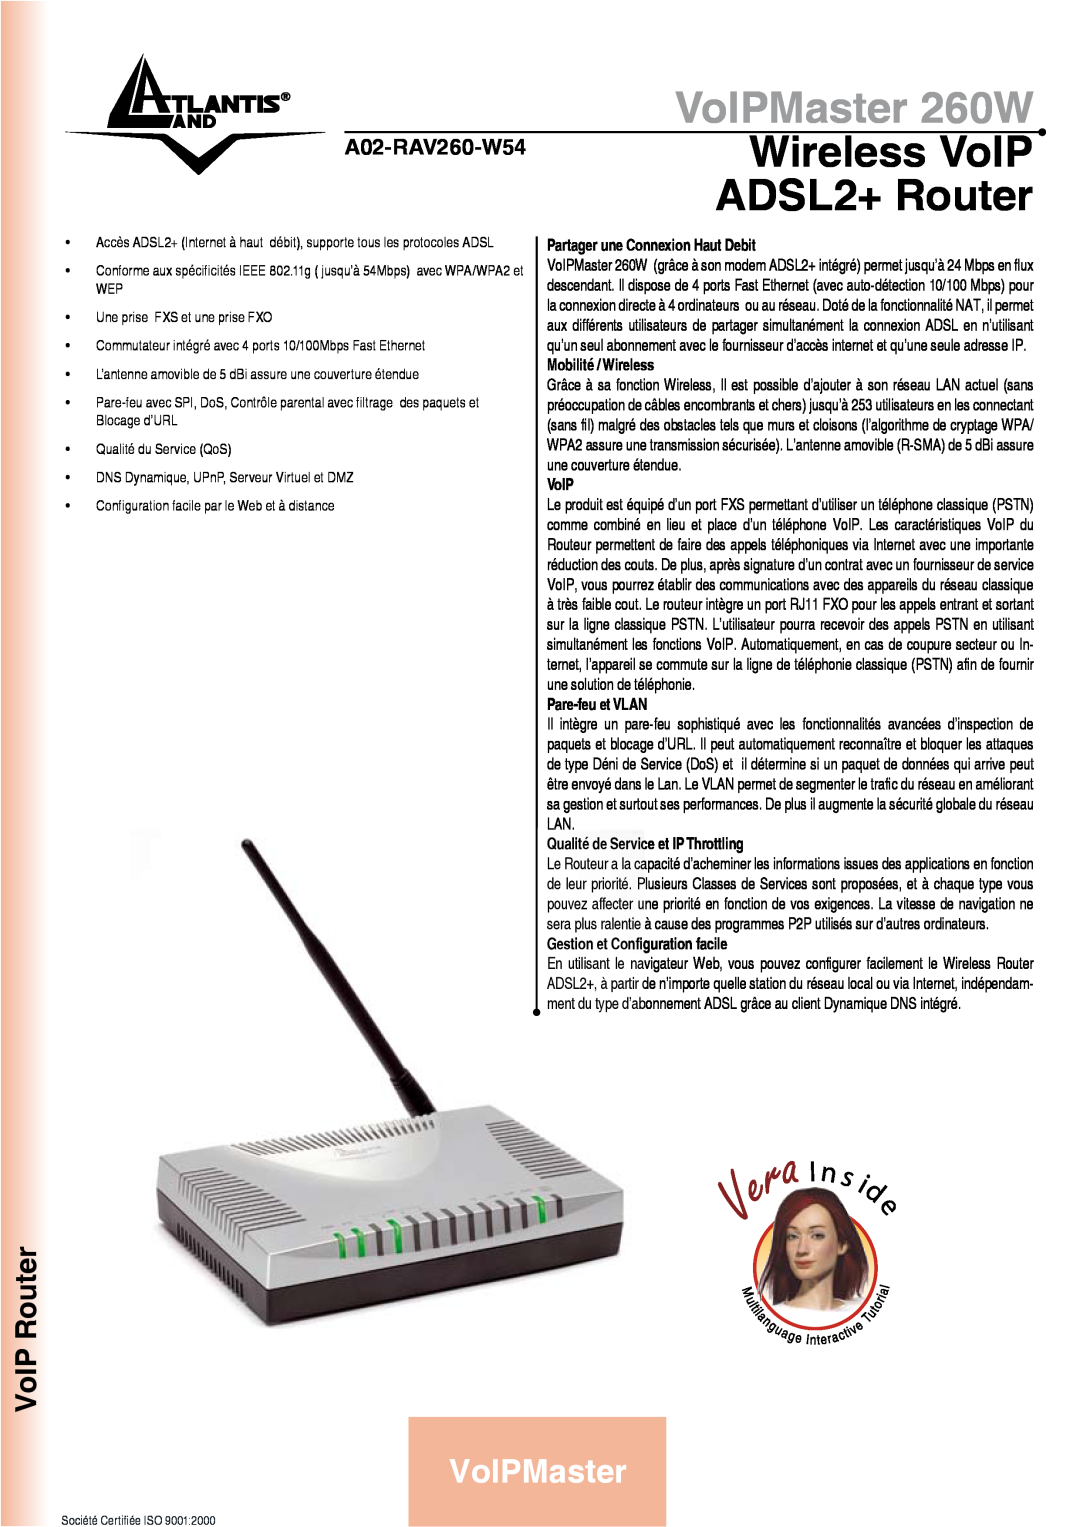 Atlantis Land manual VoIPMaster 260W, ADSL2+ Router, VoIP Router, A02-RAV260-W54Wireless VoIP, Mobilité / Wireless 